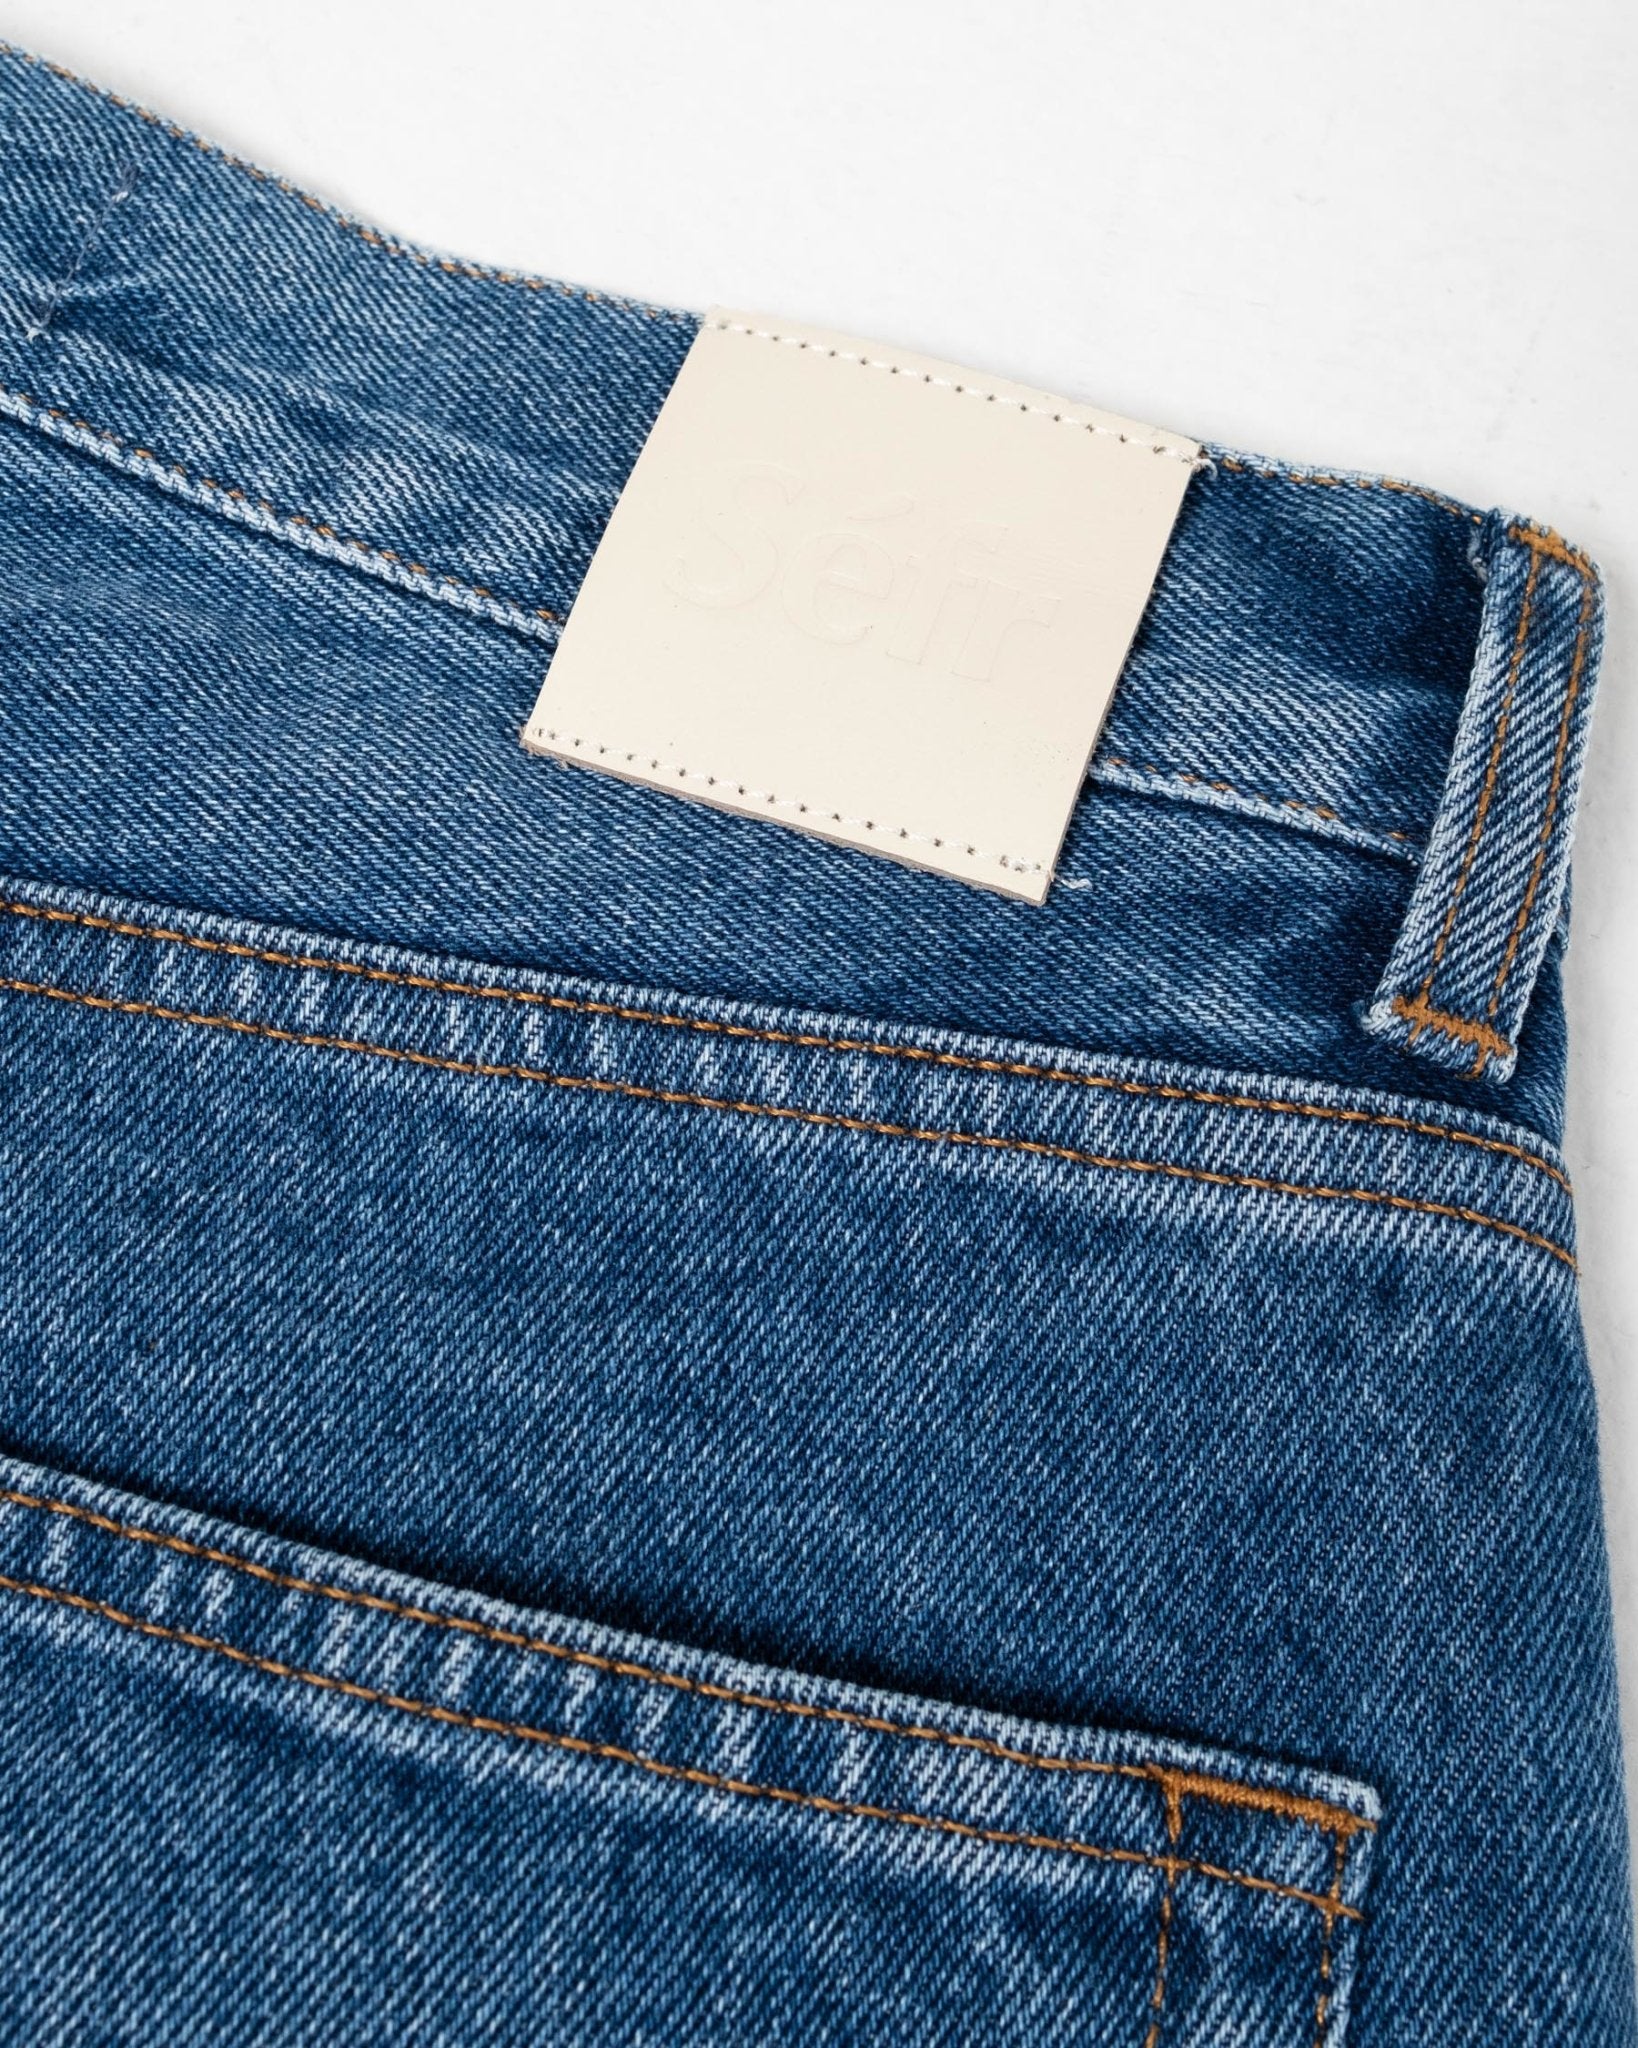 Straight Cut Jeans Worn Wash - Meadow